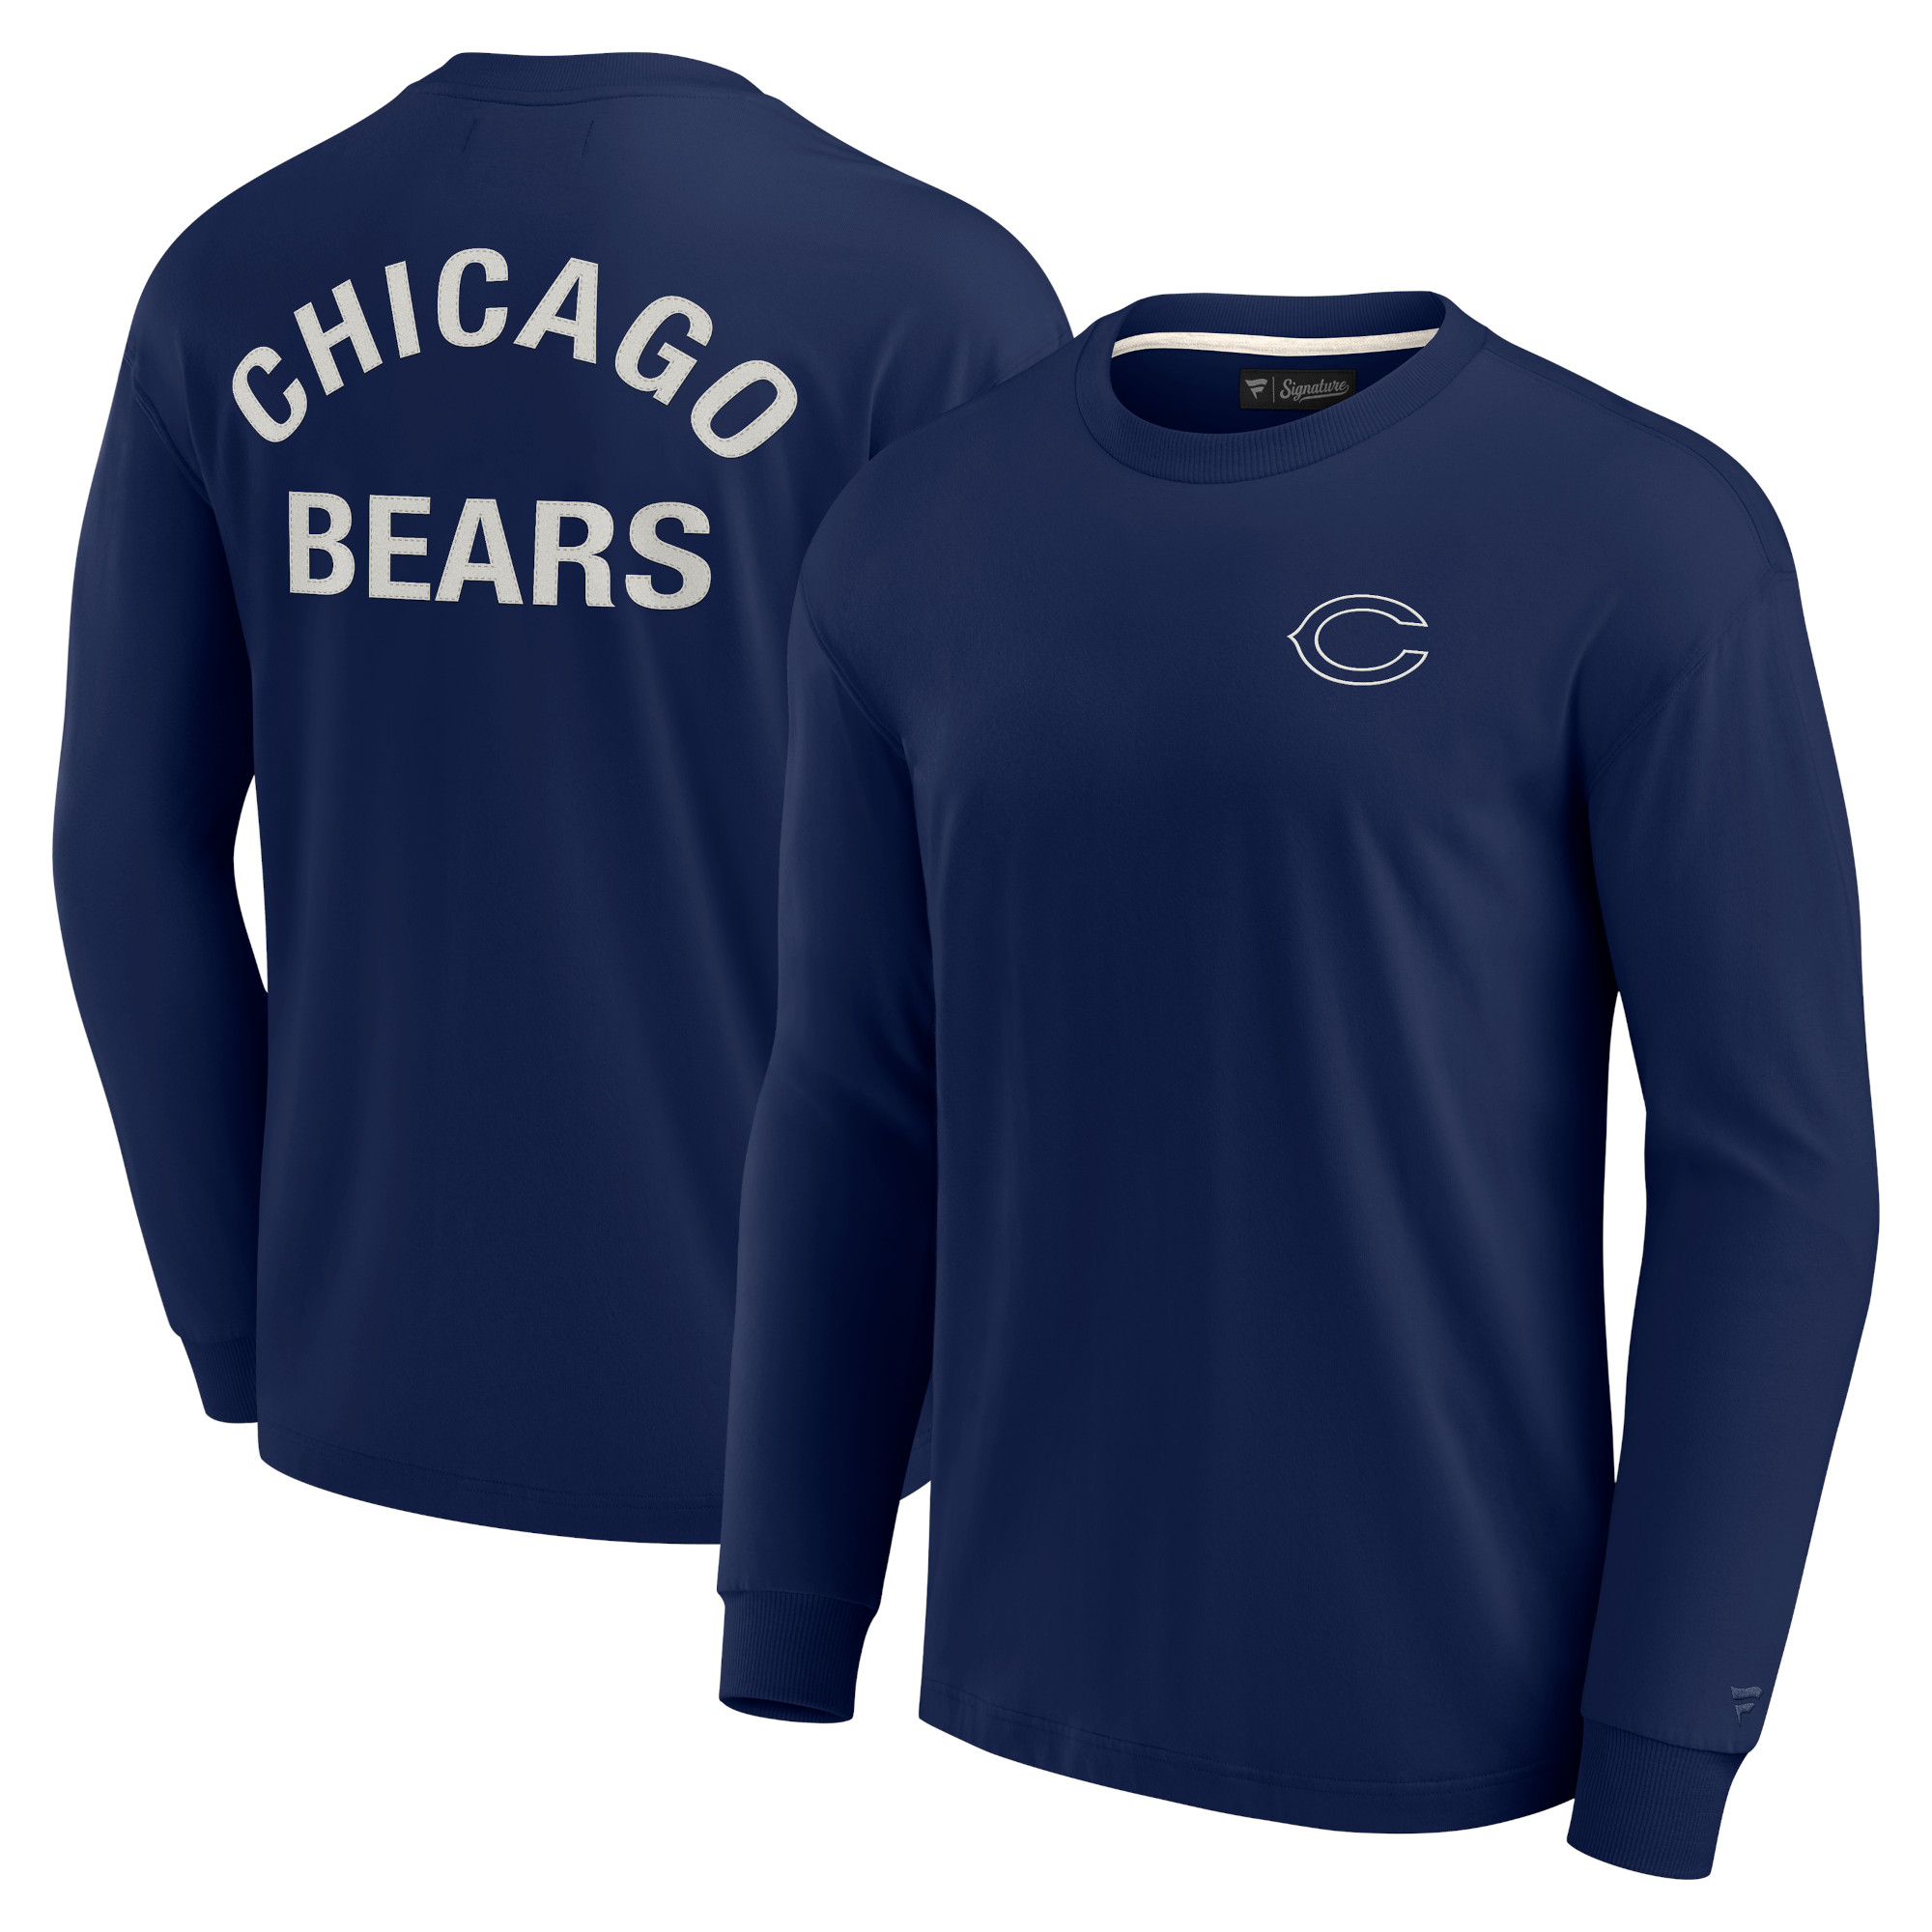 Unisex Fanatics Chicago Bears Elements Superweiches Langarm-T-Shirt, Marineblau